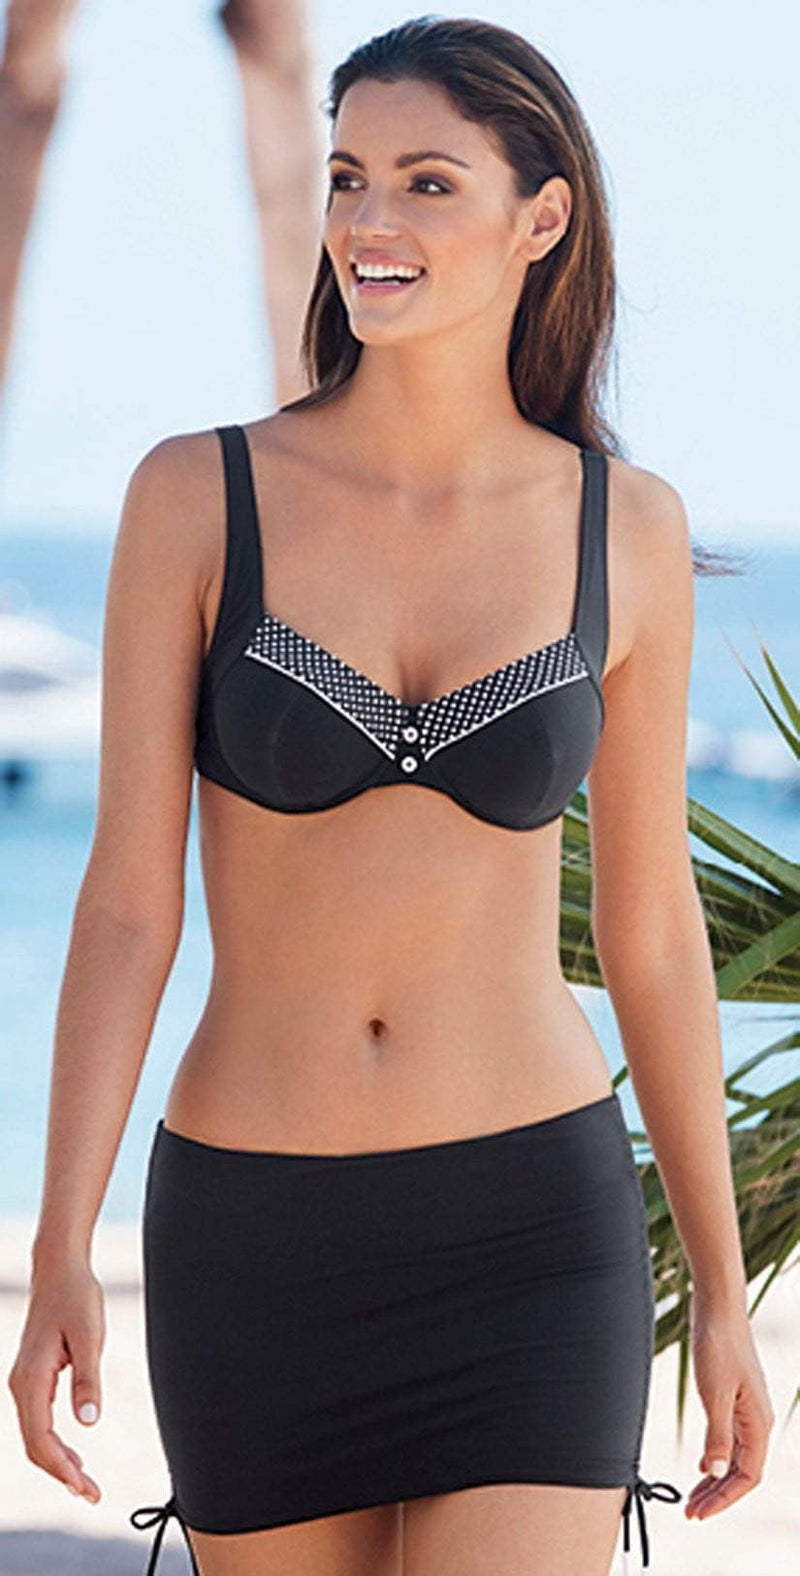 Lidea Capri Black and White Bikini Top 7576-583-077: